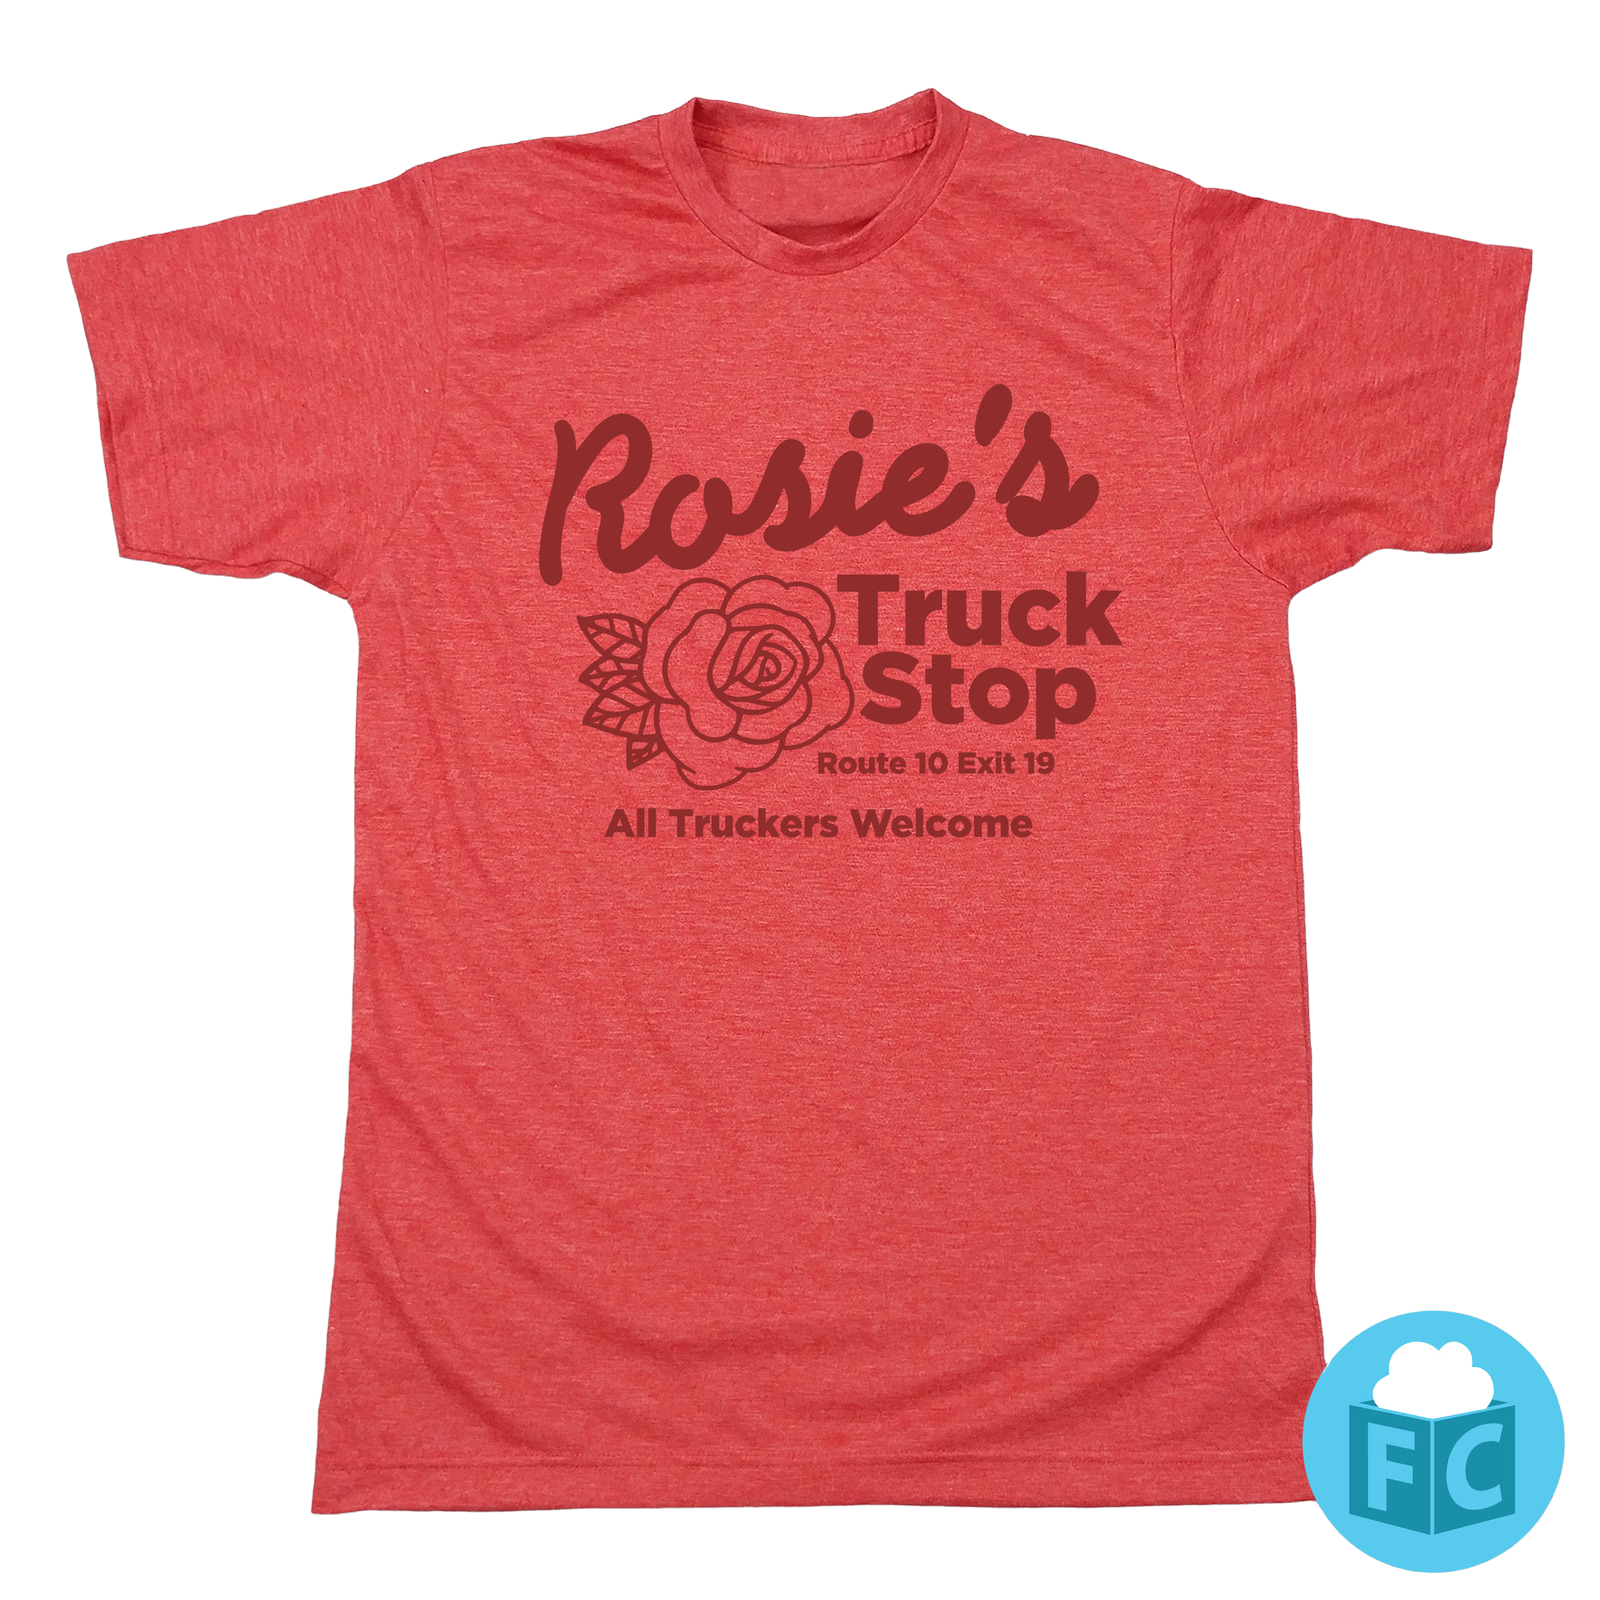 Rosie's Truck Stop red t-shirt dressing festive